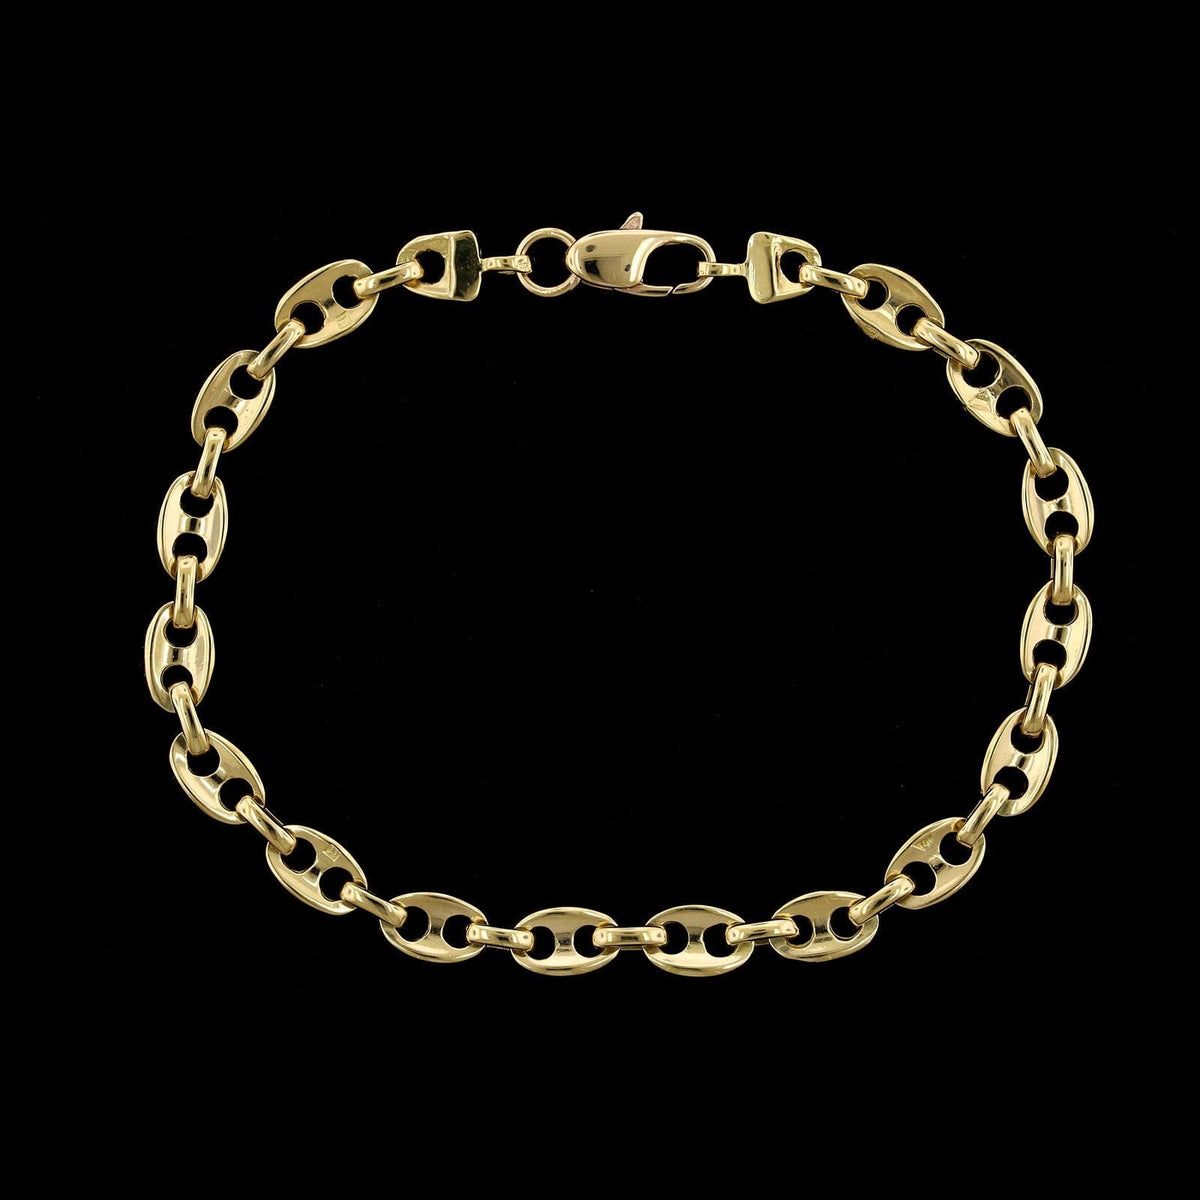 18K Yellow Gold Estate Mariner Link Bracelet, Gold, Long's Jewelers